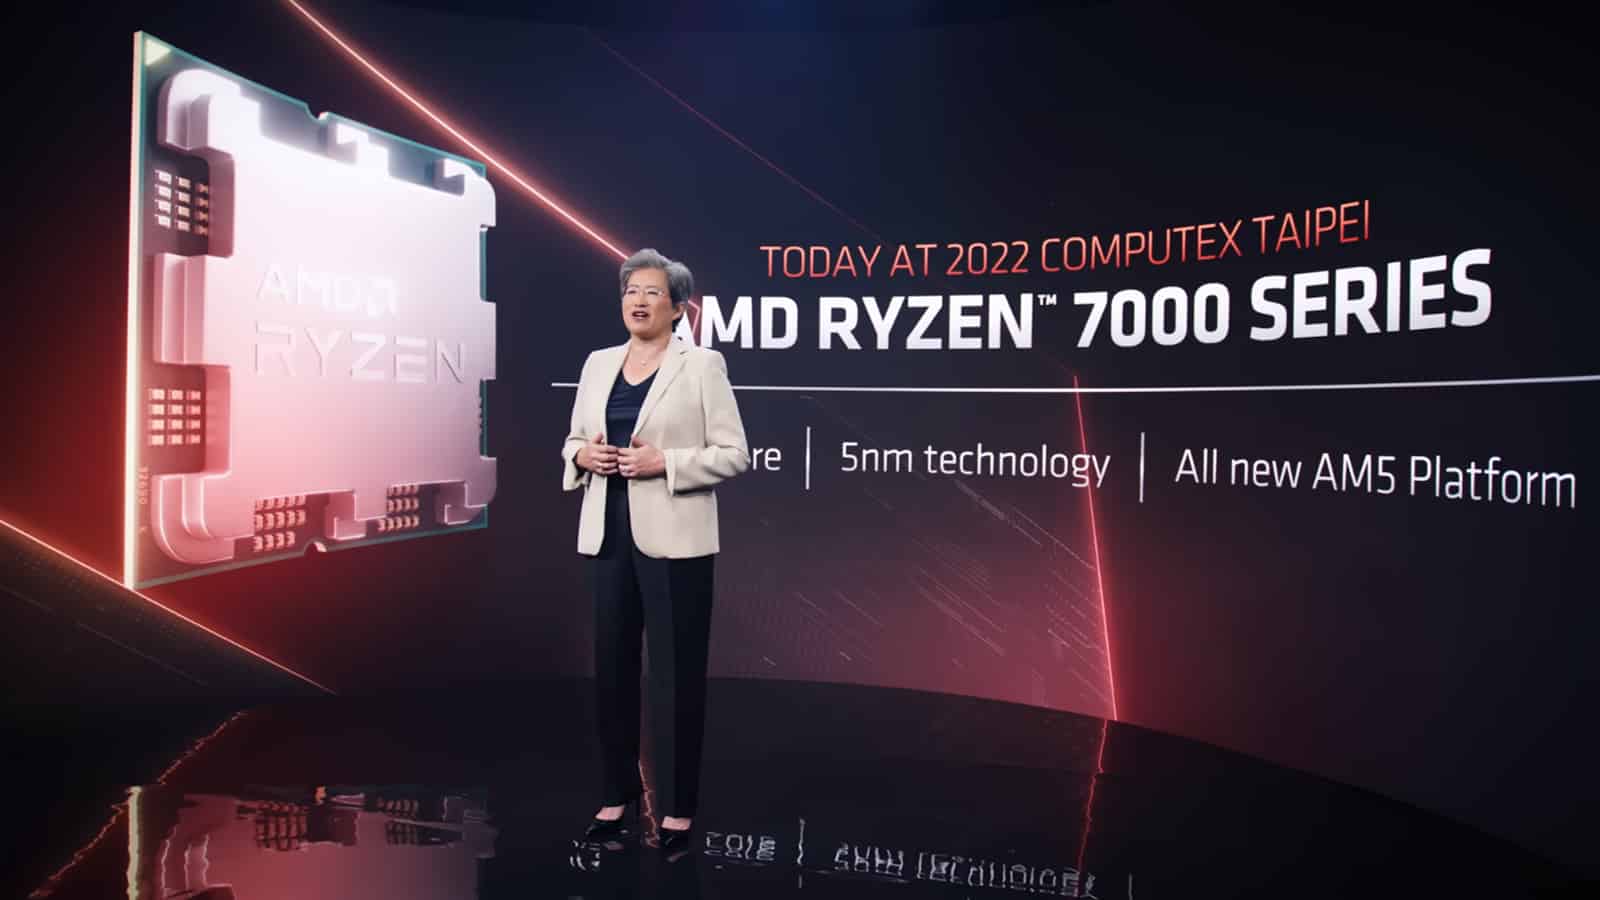 AMD RYZEN 7000 cu Lisa Su